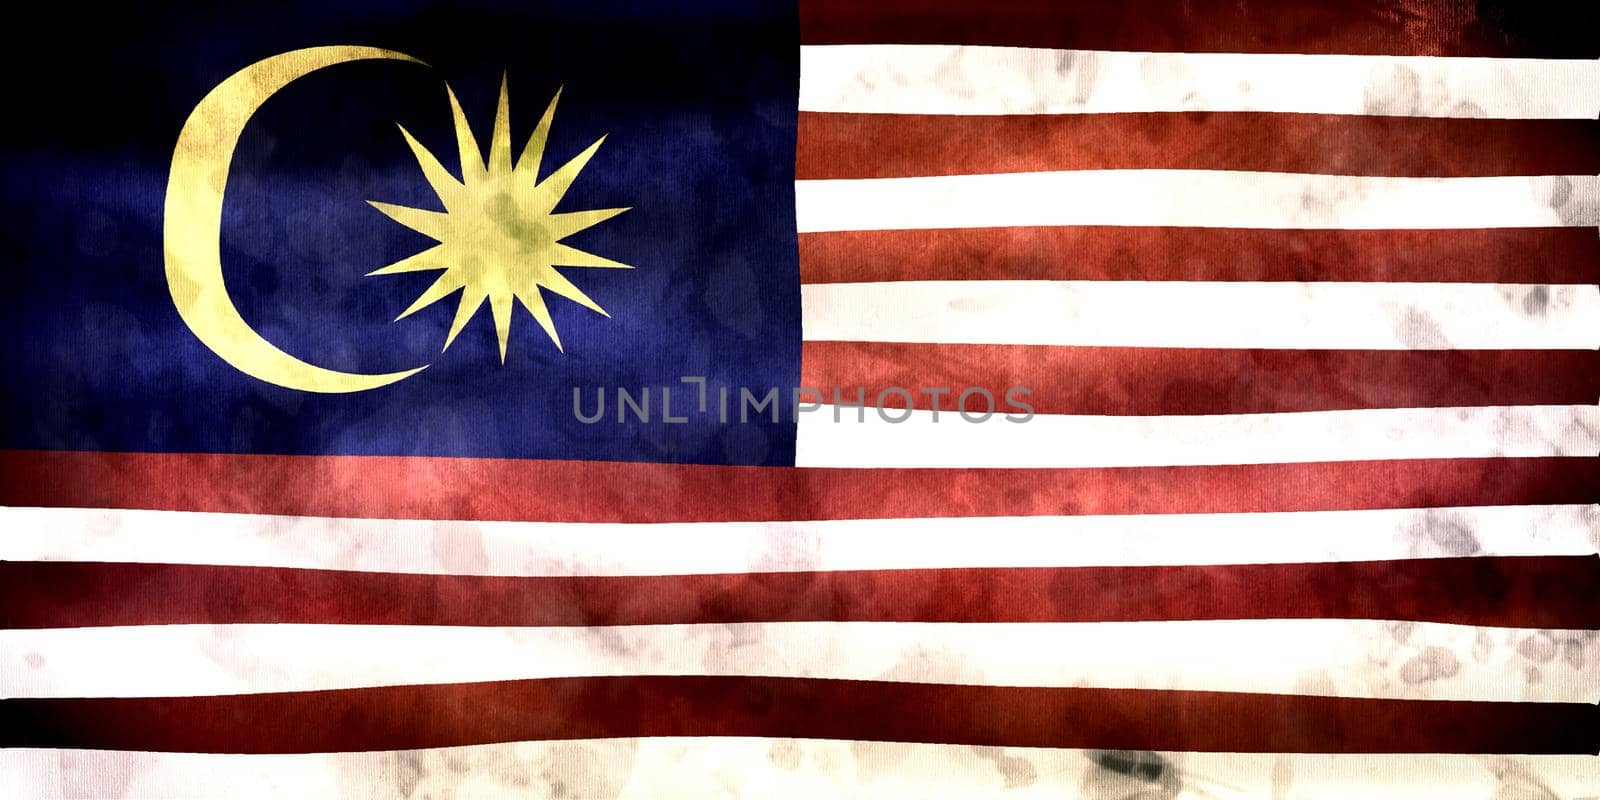 Malaysia flag - realistic waving fabric flag